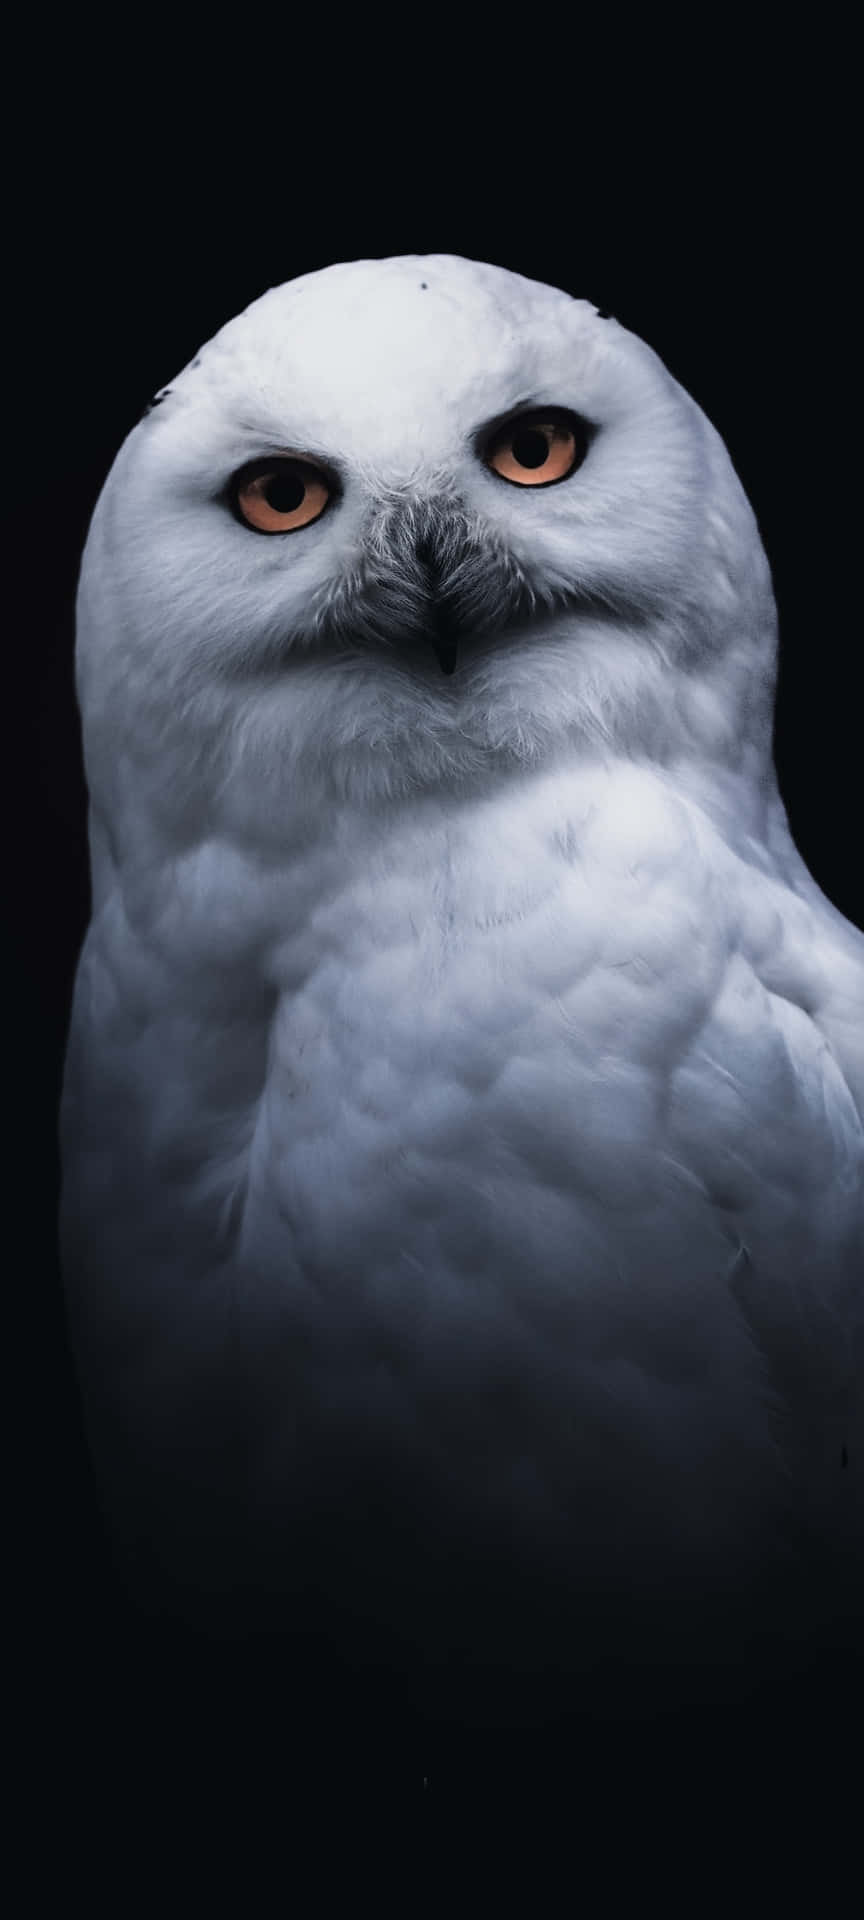 Telefon Owl 1080 X 2400 Wallpaper